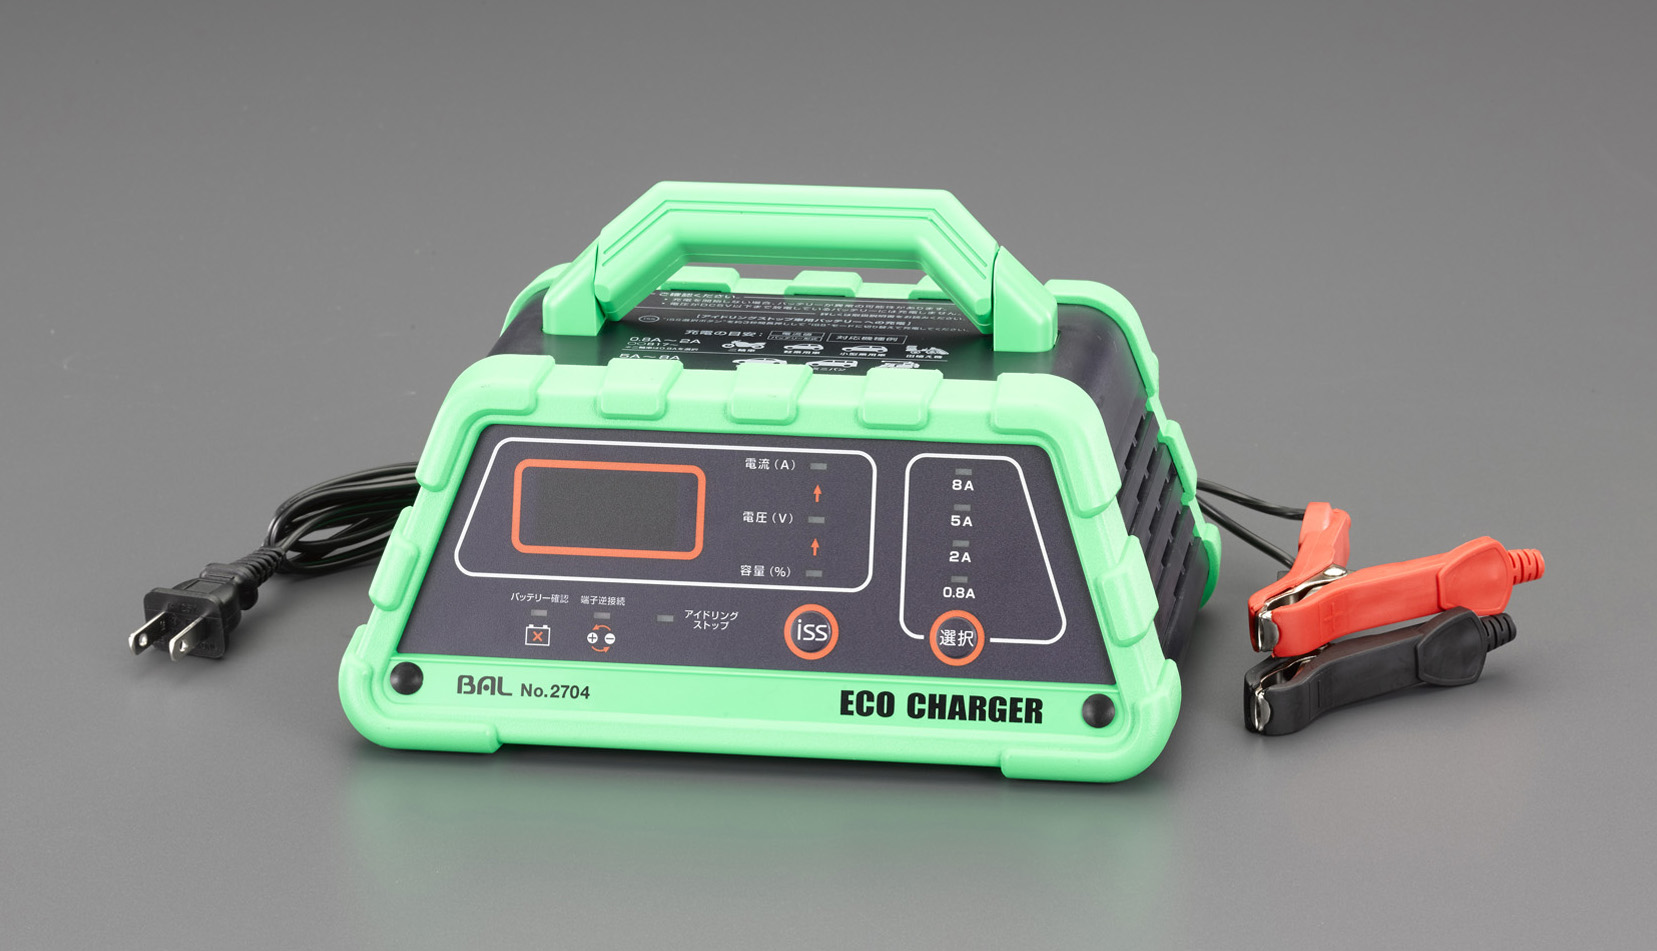 Ea815ya 36 Ac100v 自動充電器 ｱｲﾄﾞﾘﾝｸﾞｽﾄｯﾌﾟ車対応 のページ Sakkey エスコの商品を検索